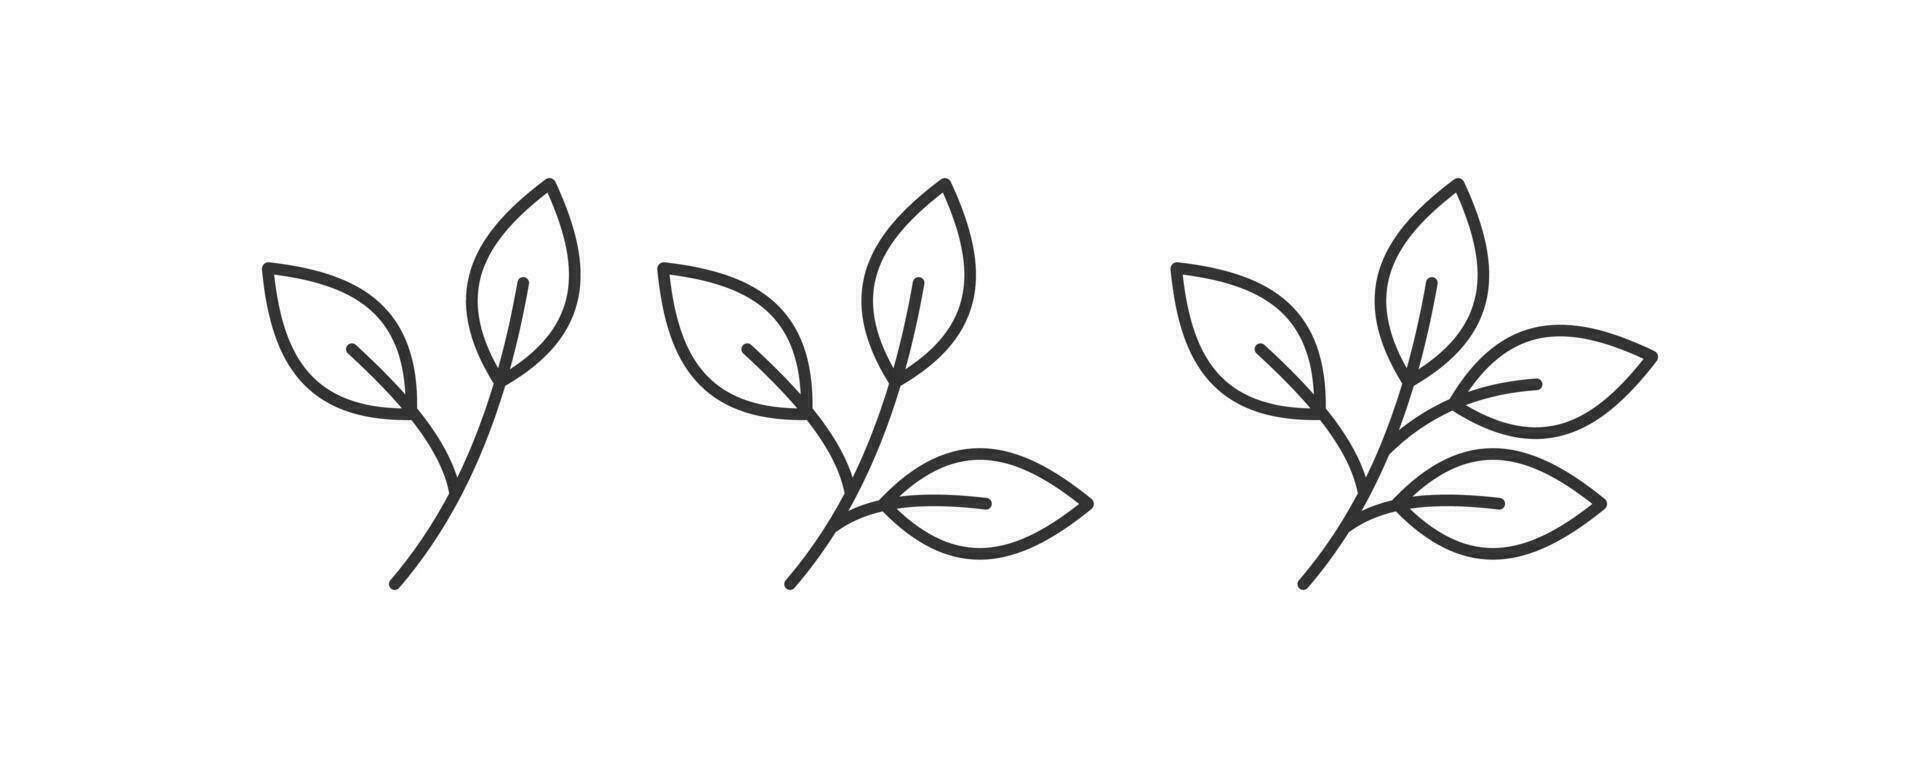 Sprigs of tea icon. Vector illustration design.